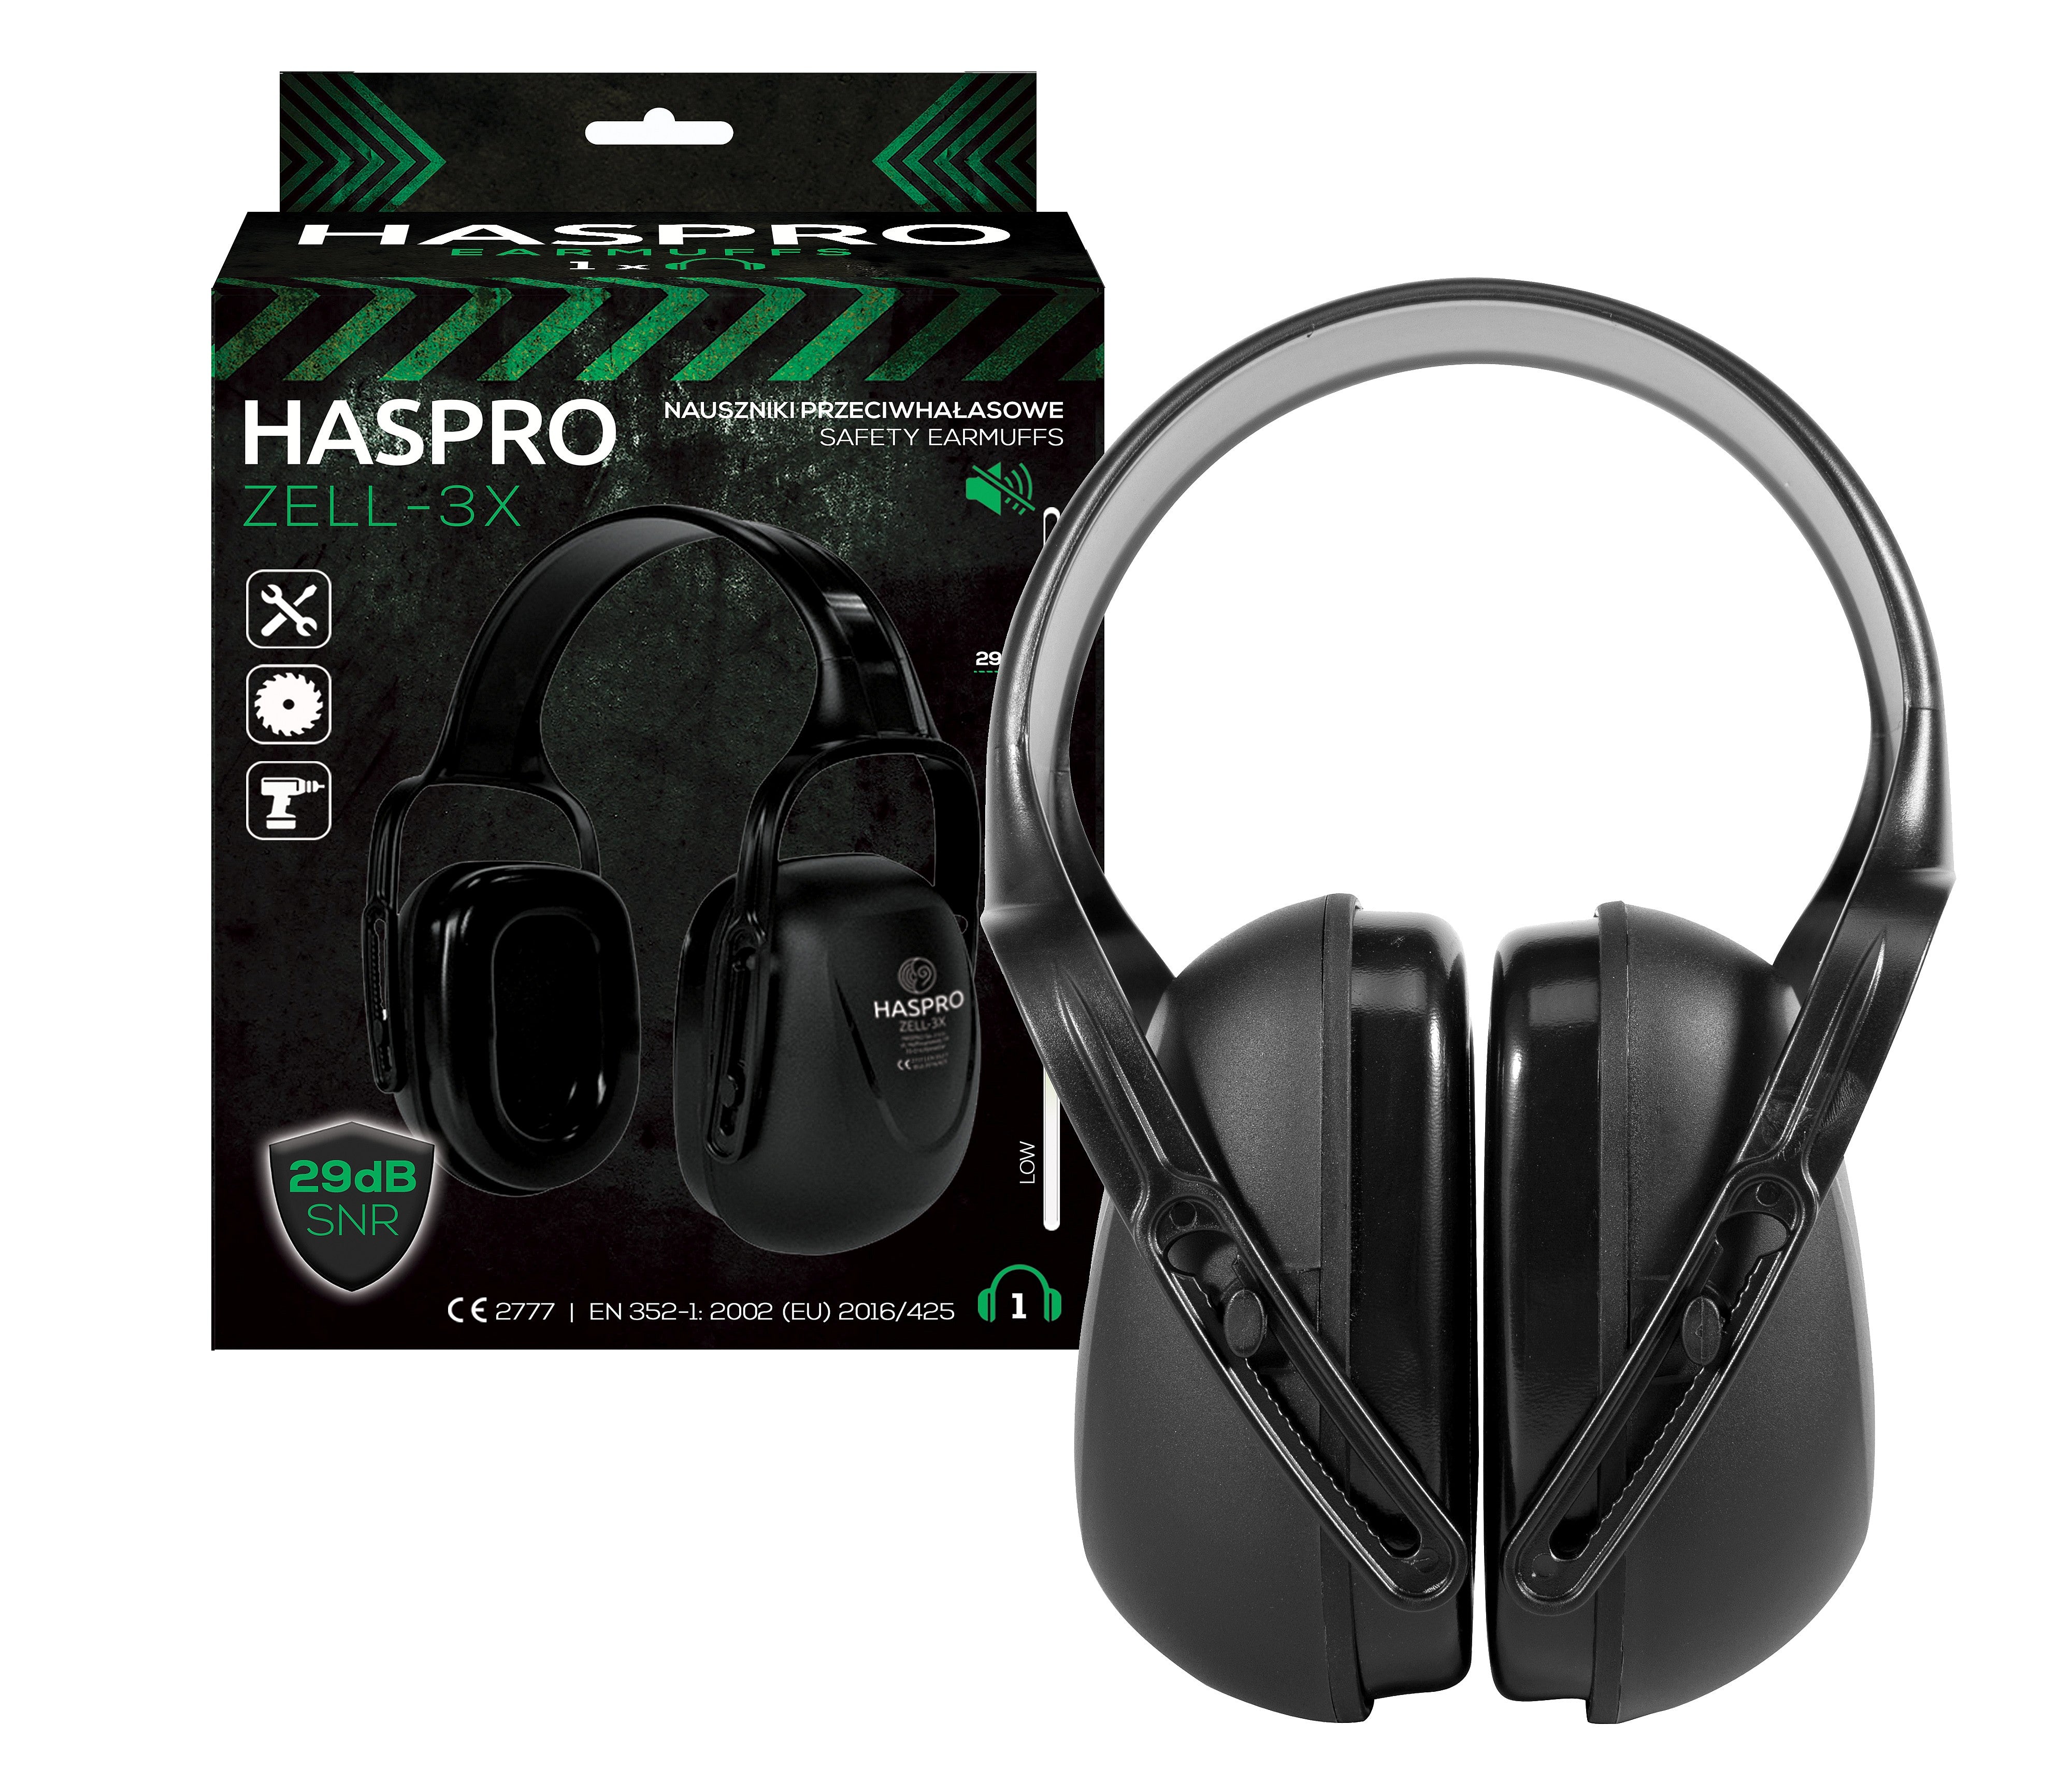 Haspro ZELL-3X Casti profesionale, antifoane externe de protectie